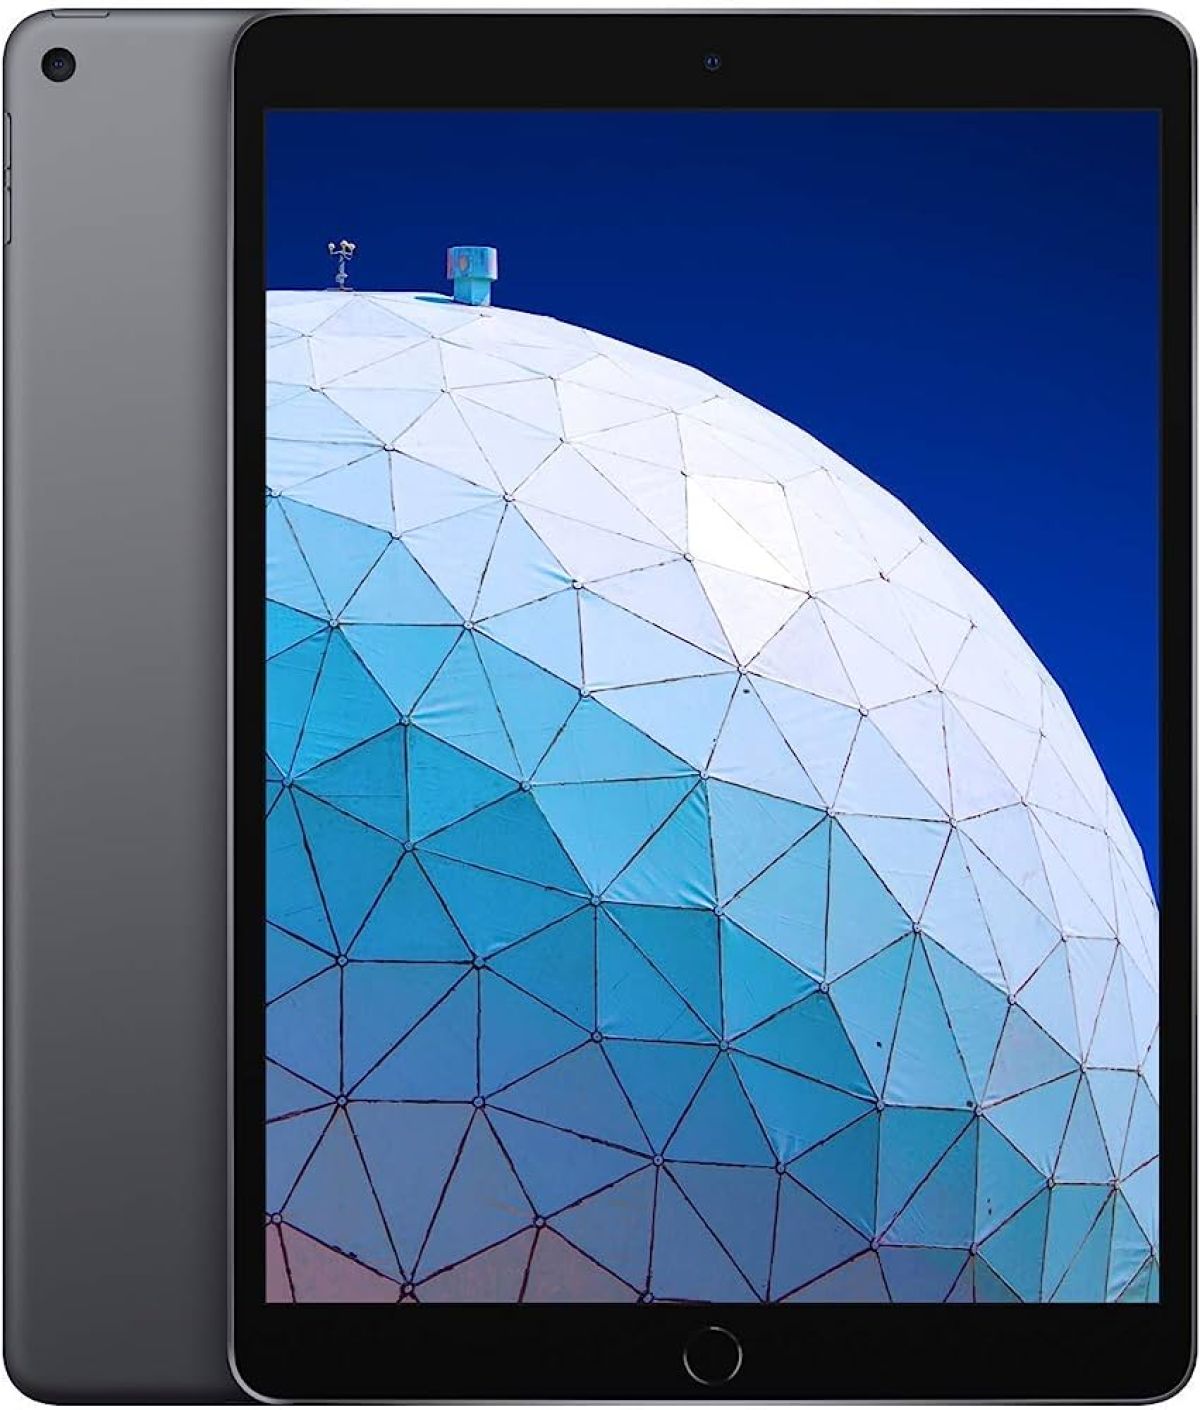 Apple iPad Mini 3 64 Go Wifi + 4G doré reconditionné